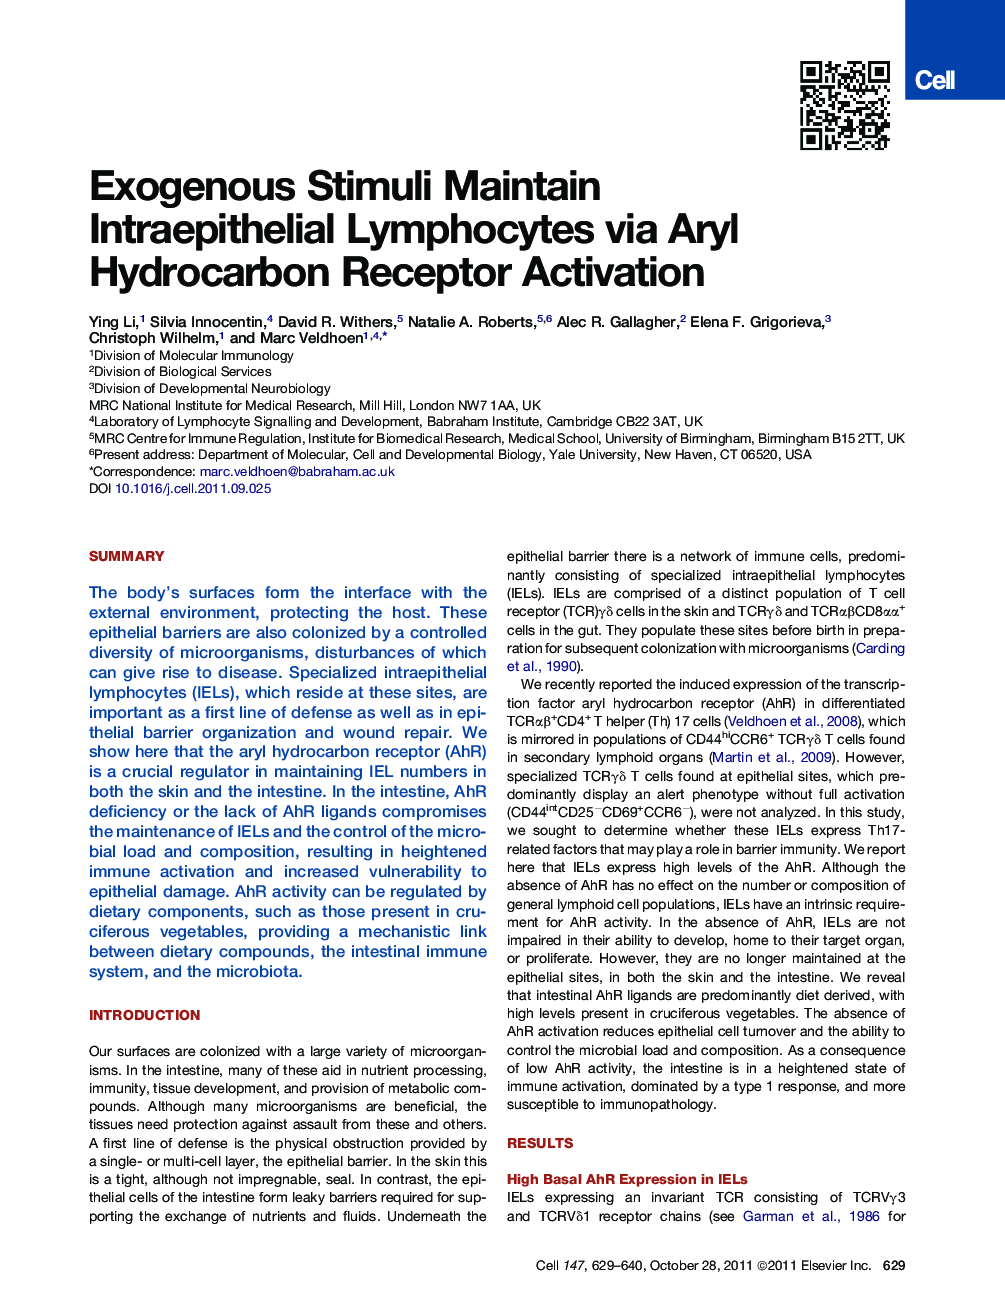 Exogenous Stimuli Maintain Intraepithelial Lymphocytes via Aryl Hydrocarbon Receptor Activation